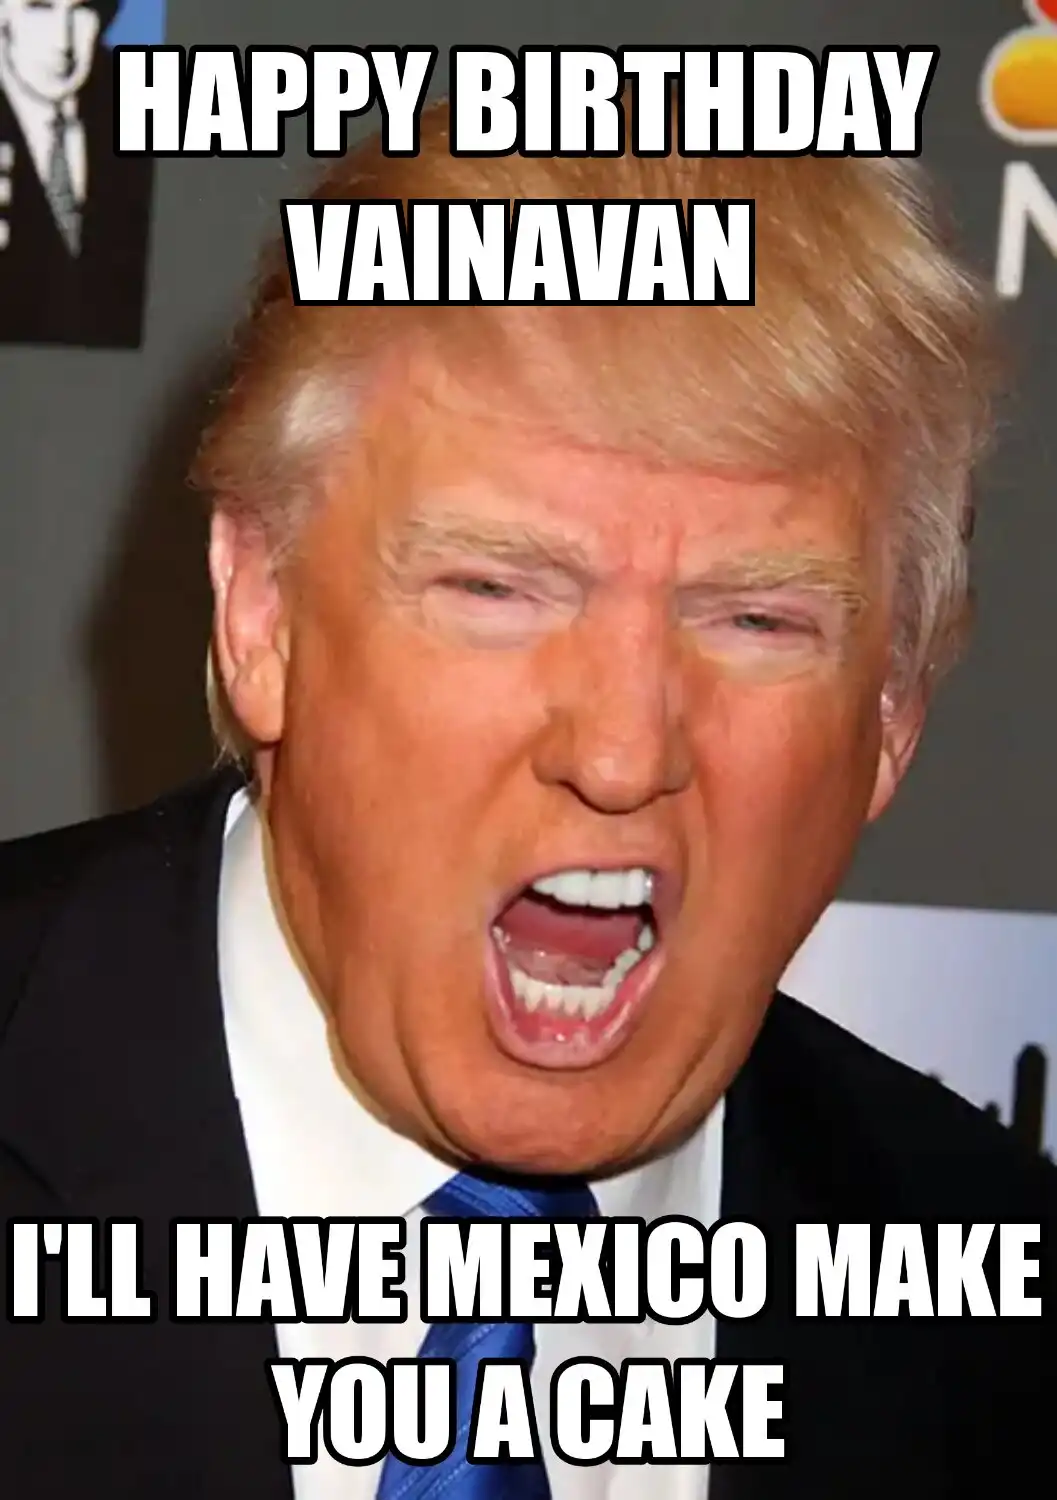 Happy Birthday Vainavan Mexico Make You A Cake Meme